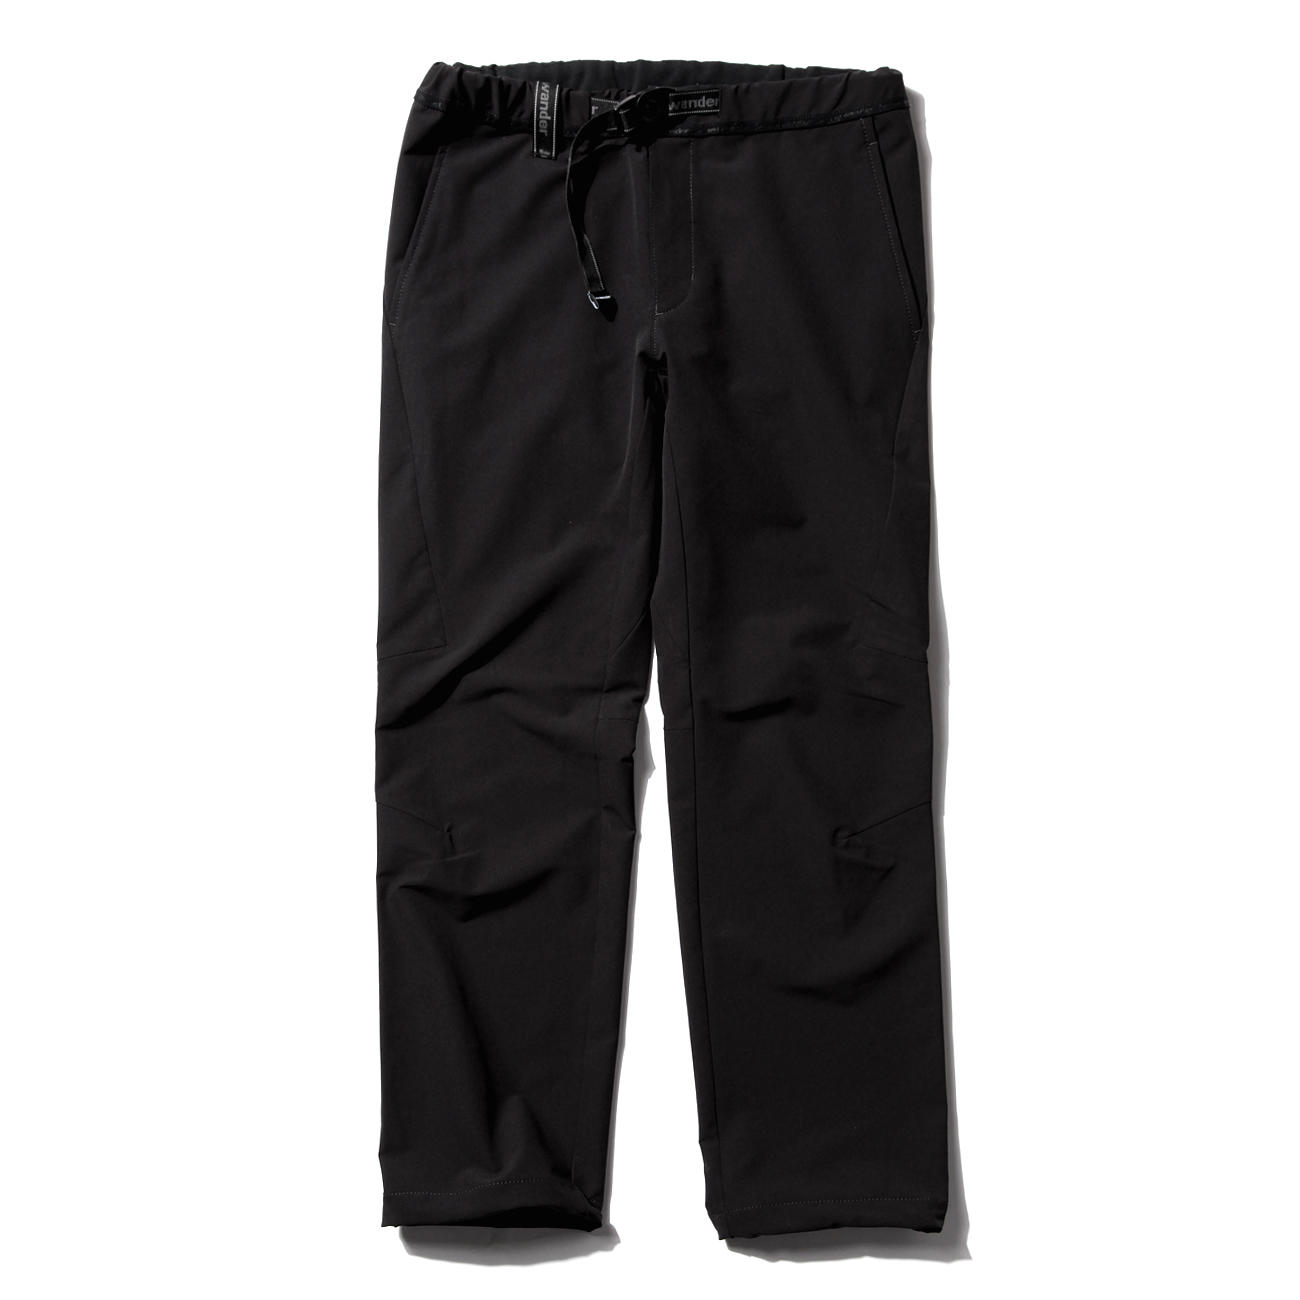 2way stretch long pants - Black